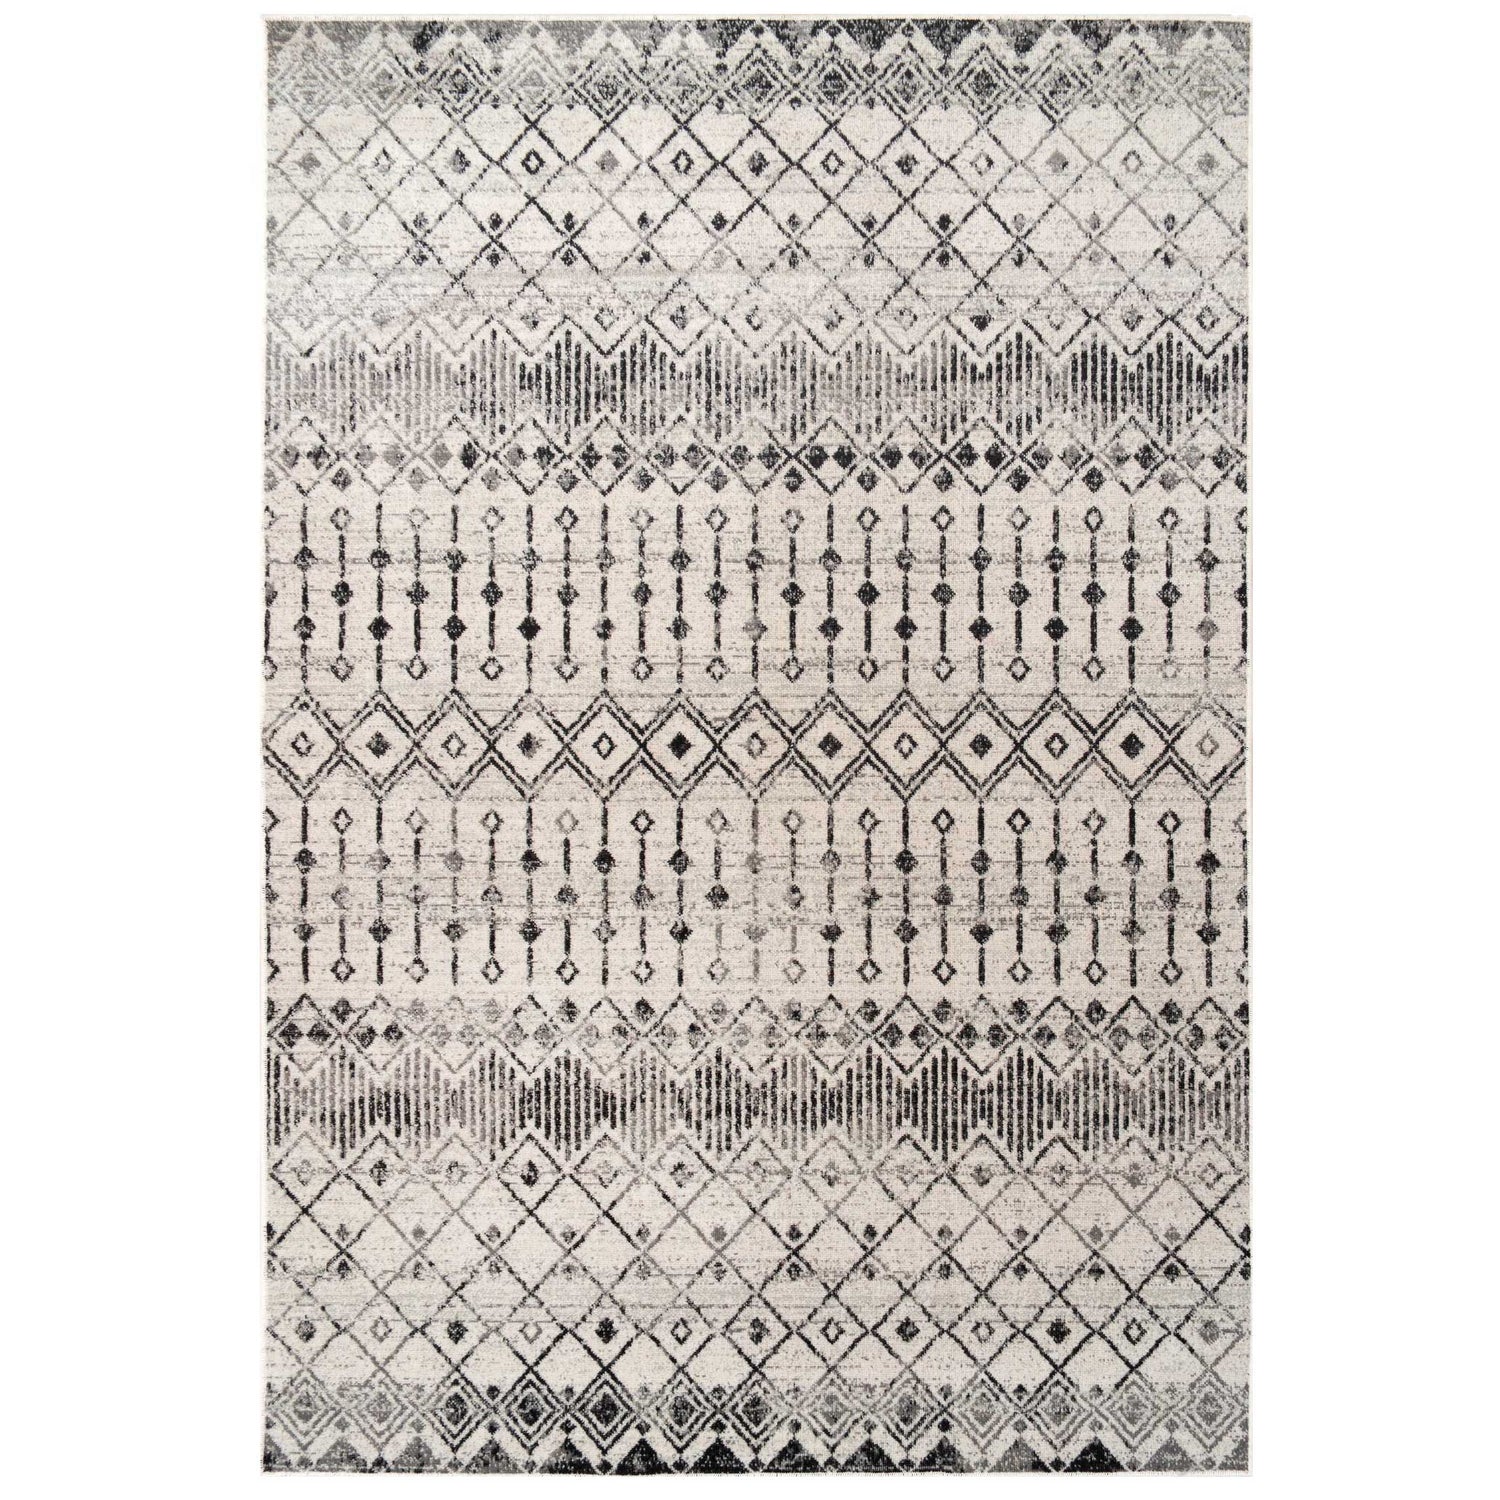 Grey Moroccan Tile Living Room Rug